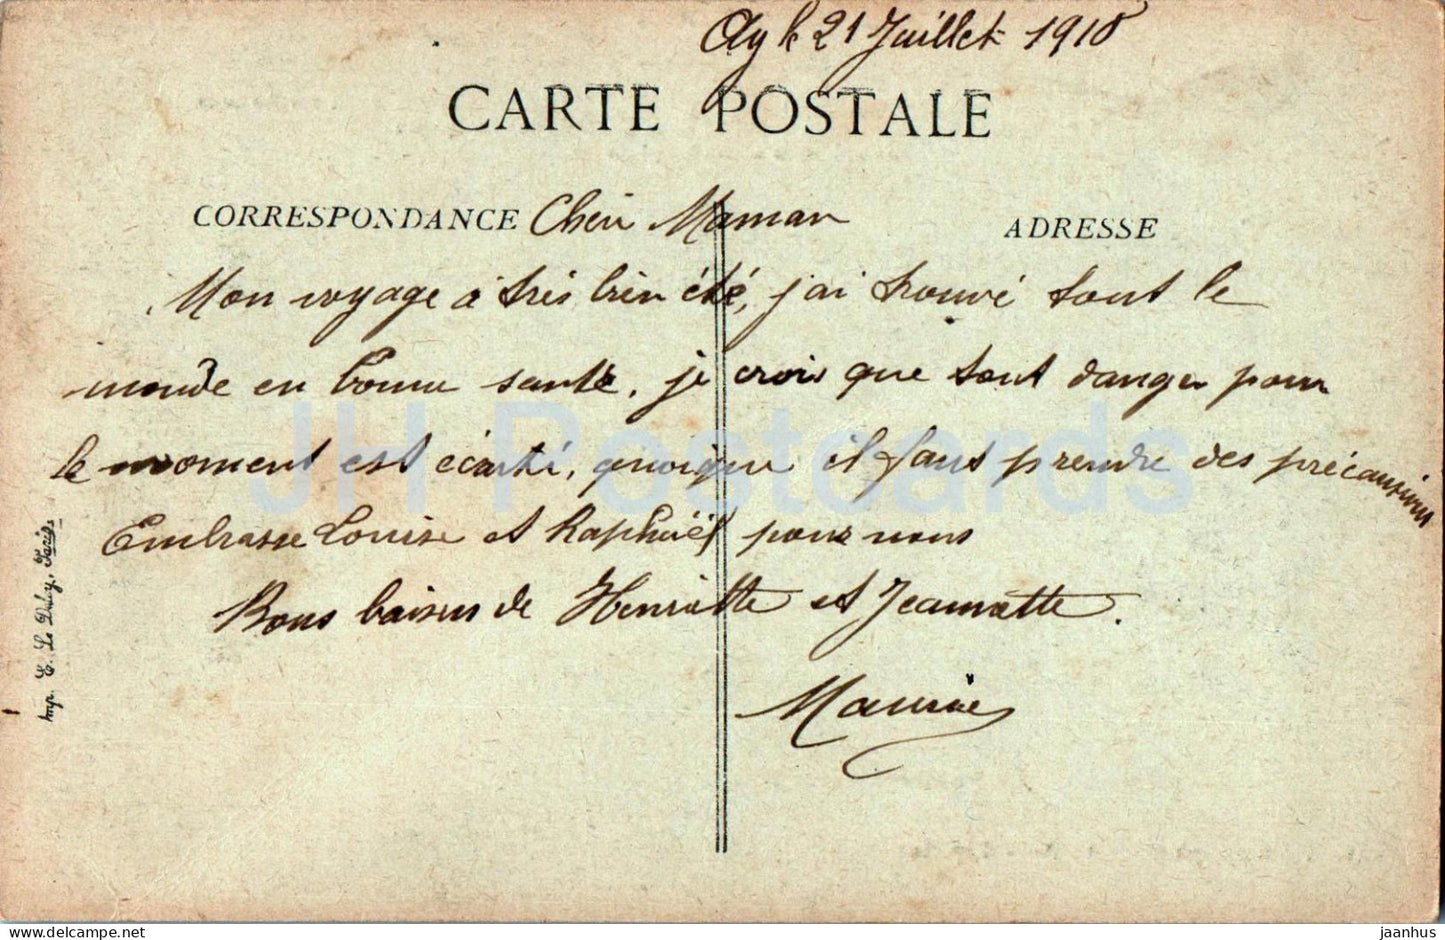 Mareuil sur Ay - Les Goisses - alte Postkarte - 1918 - Frankreich - gebraucht 